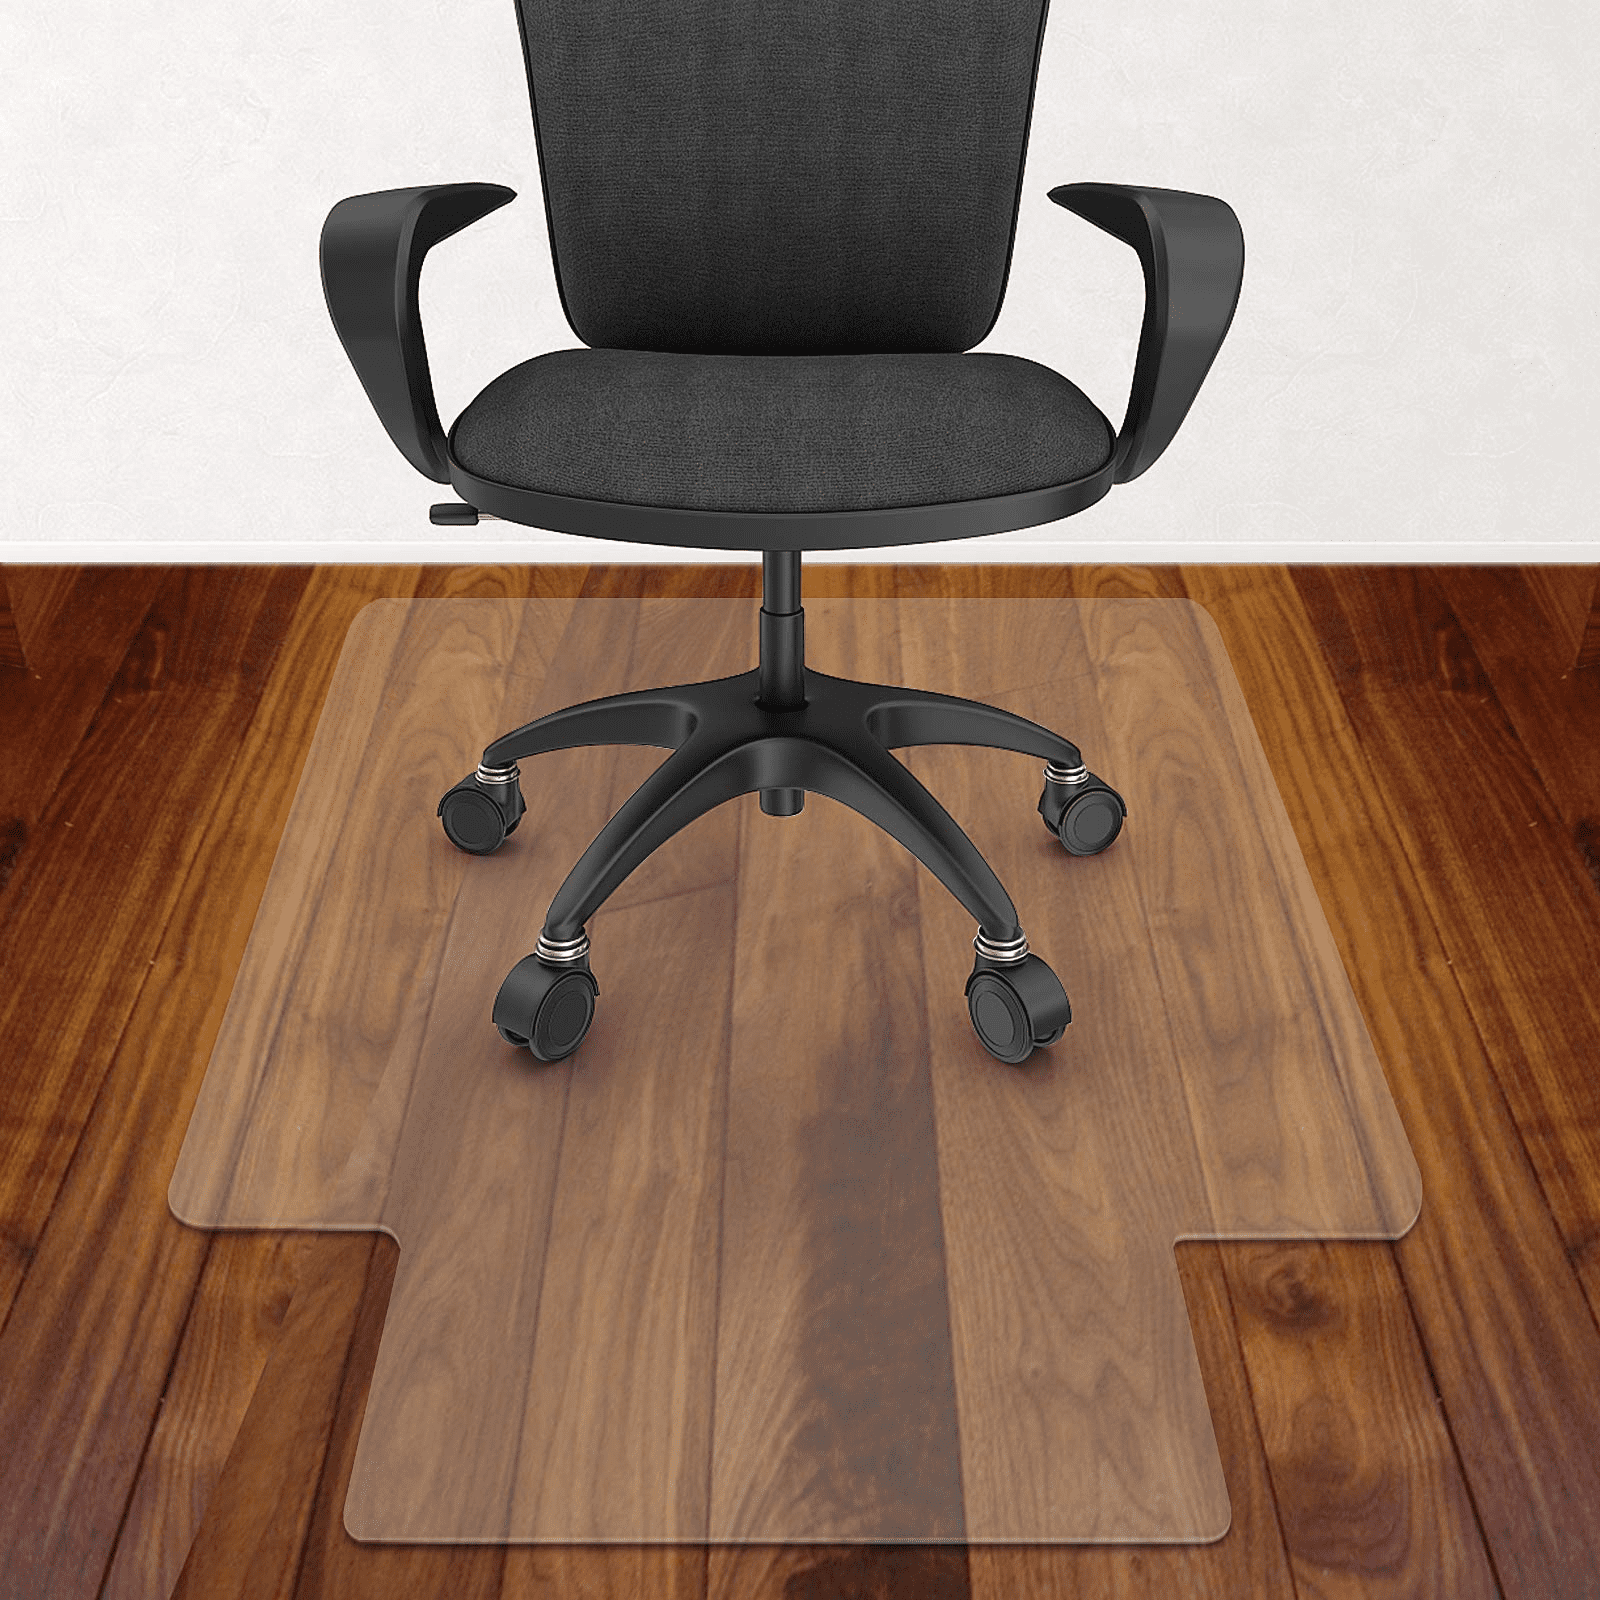 Home Office Chair Mat For Hardwood Floor 36 X 48